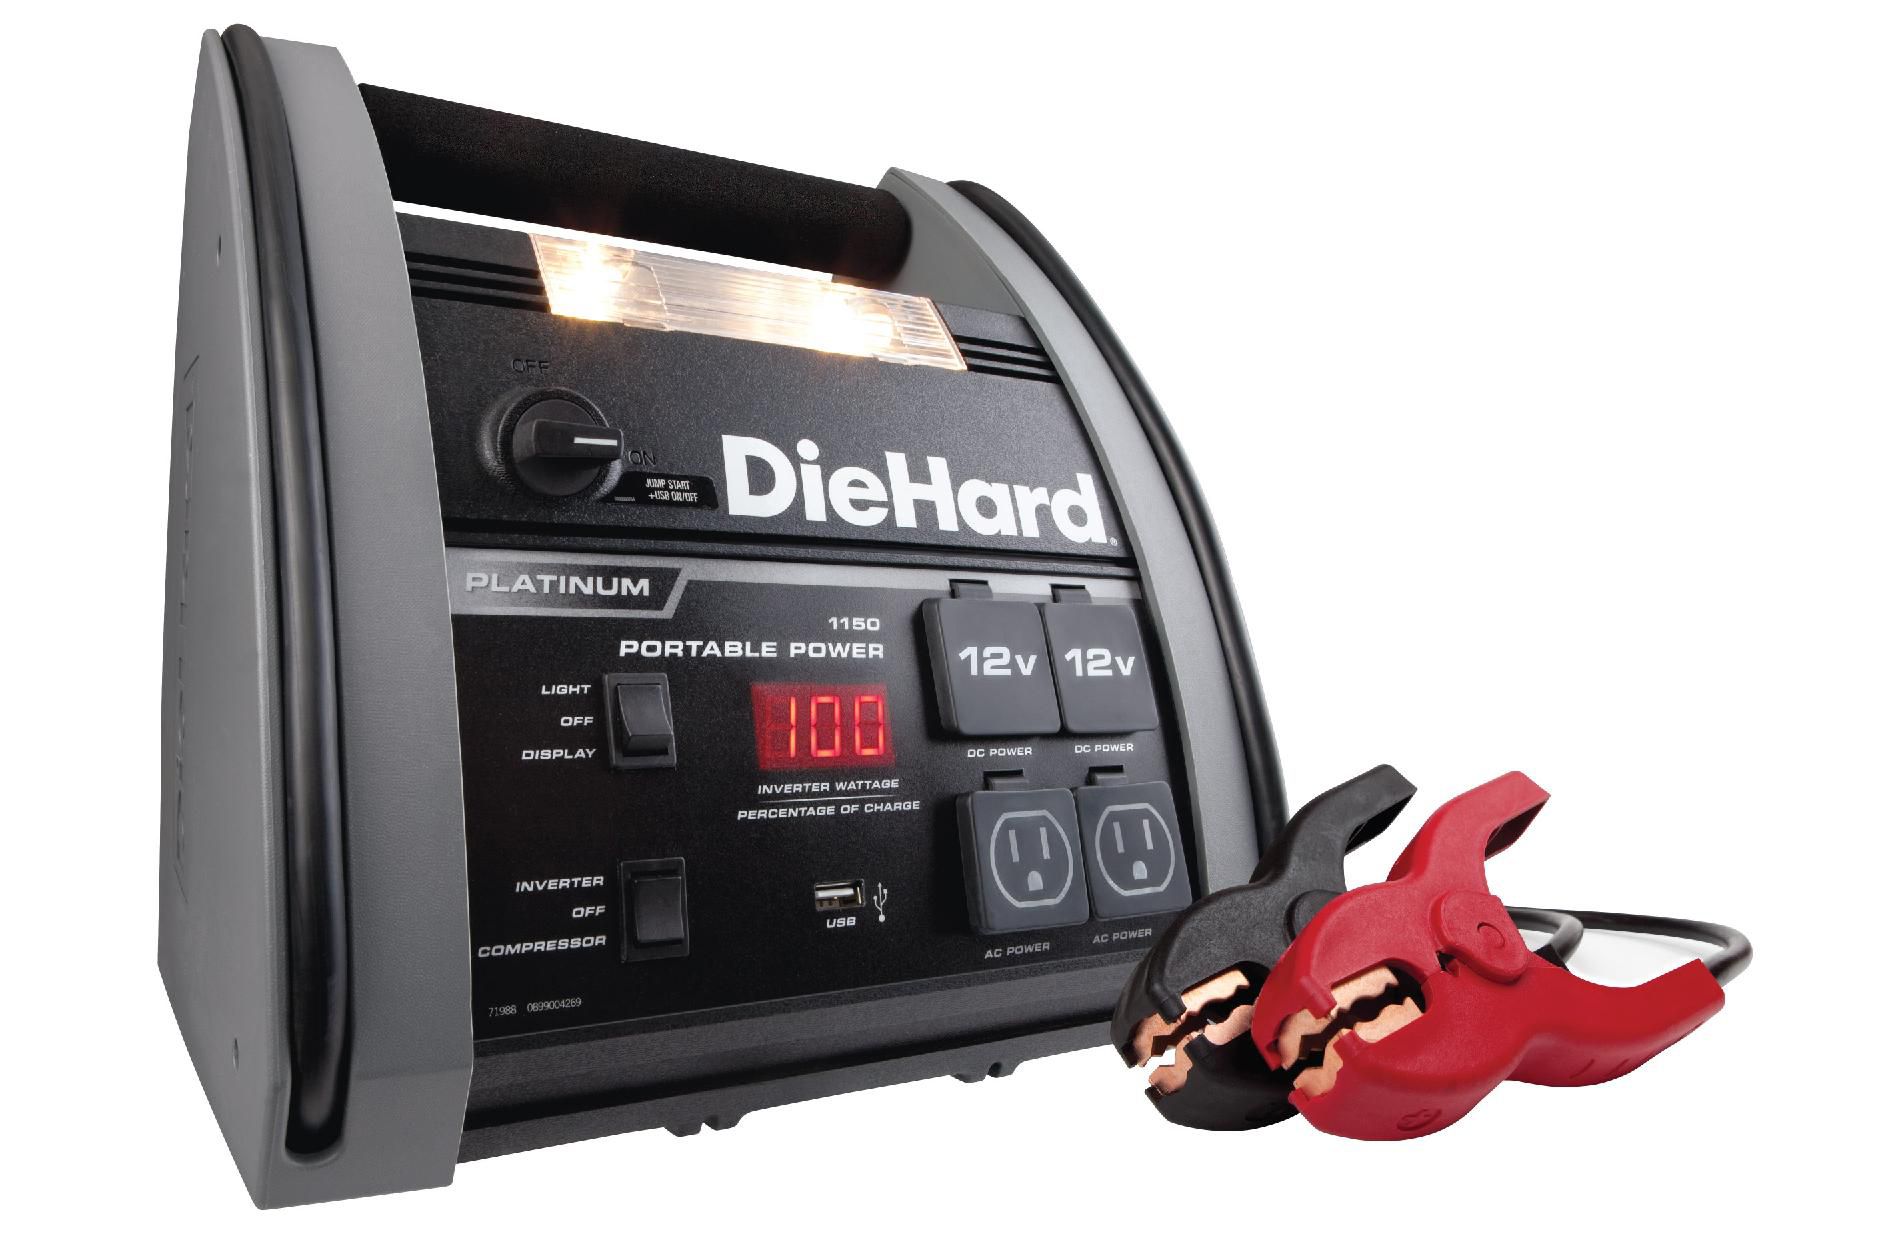 DieHard Platinum Portable Power 1150 with JumpStarter & Air Inflator Diehard 1150 Portable Power Not Charging